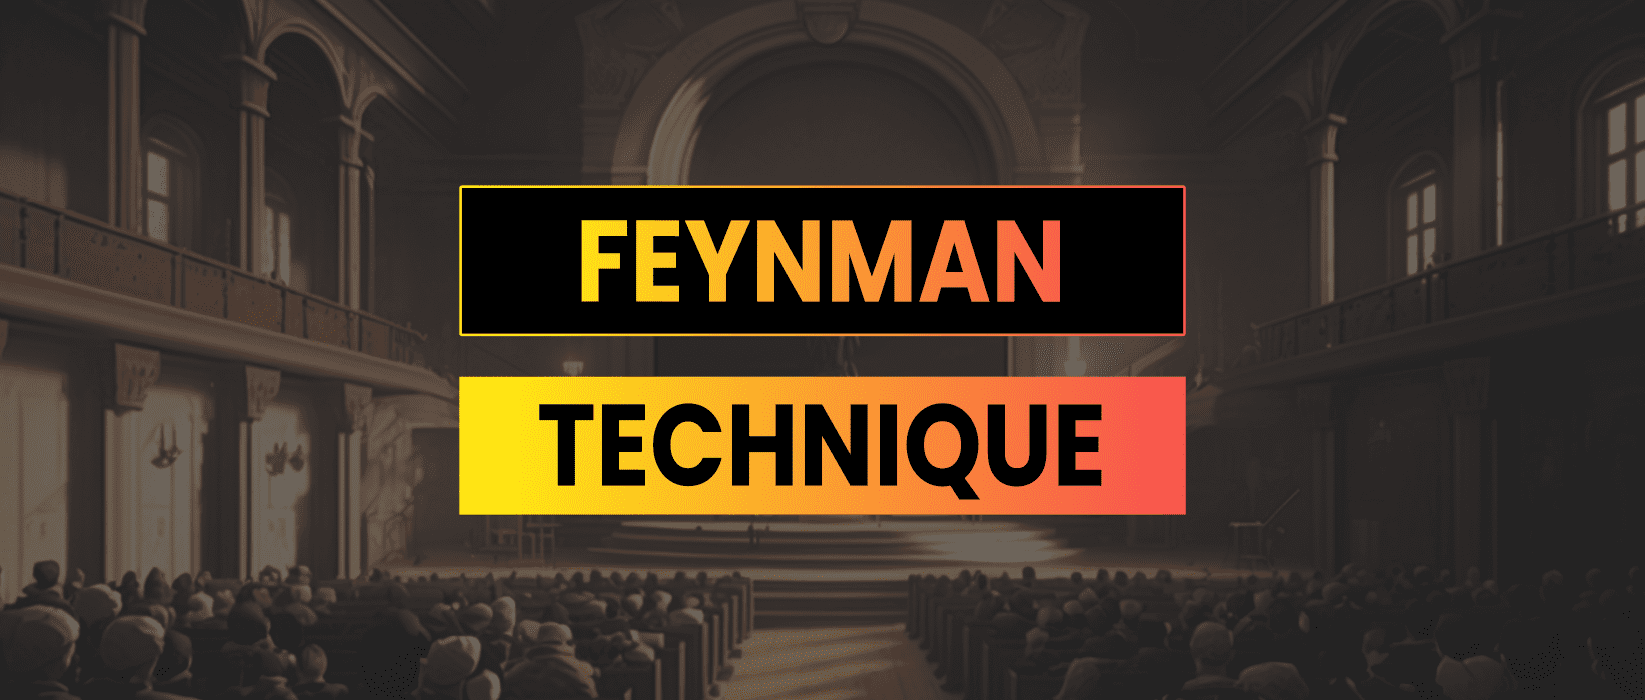 The Feynman Technique 2.0